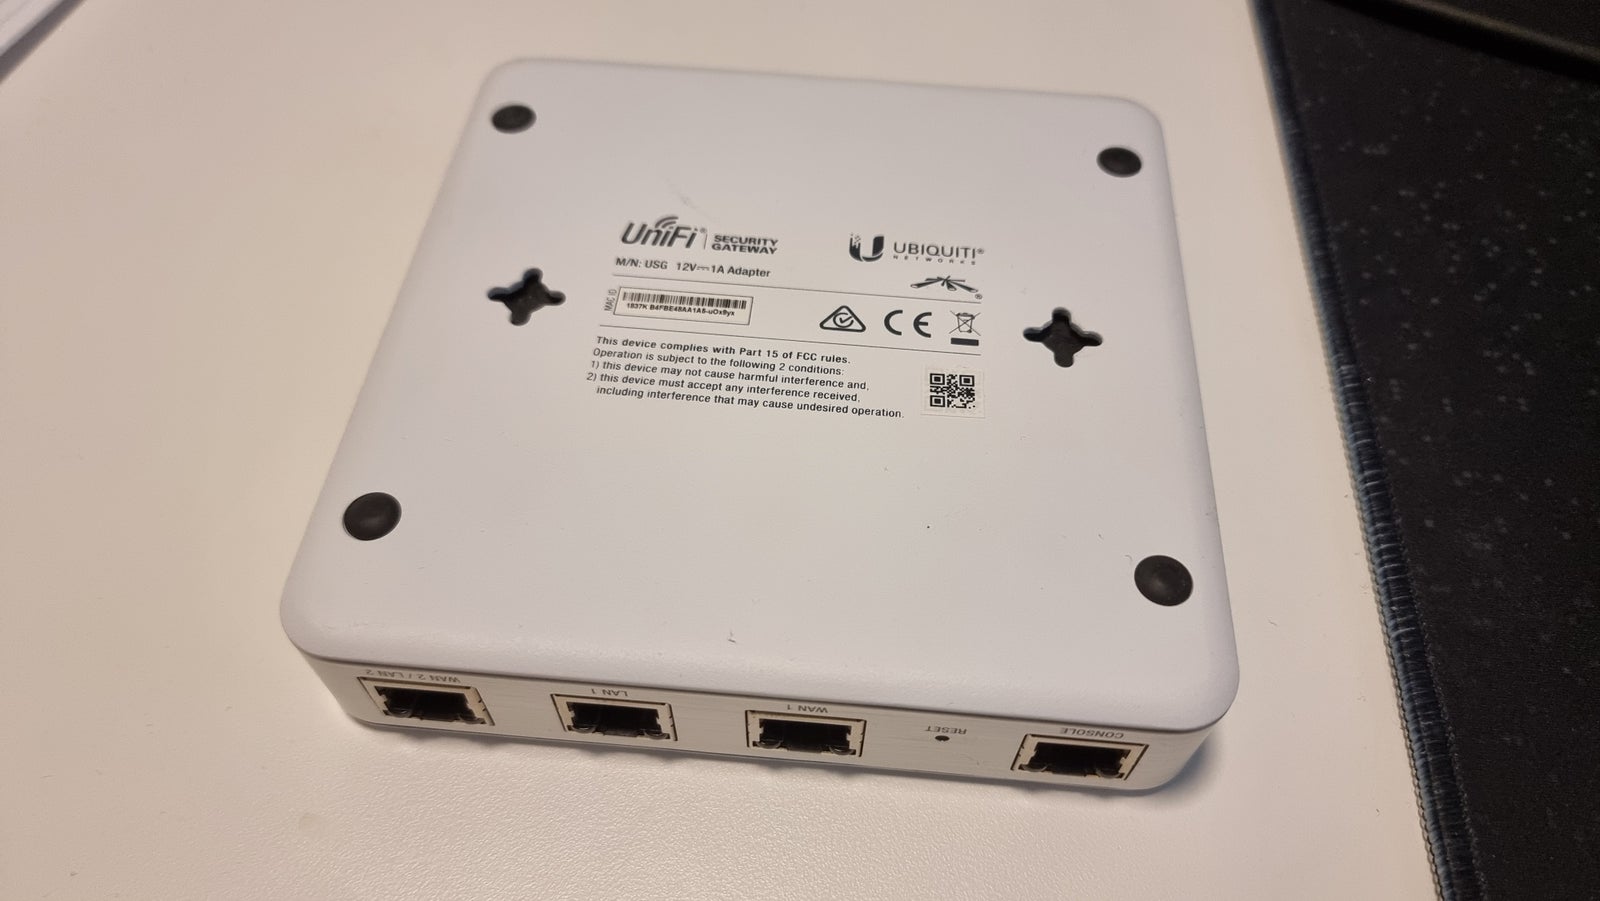 Router, Ubiquiti UniFi USG-3p, God